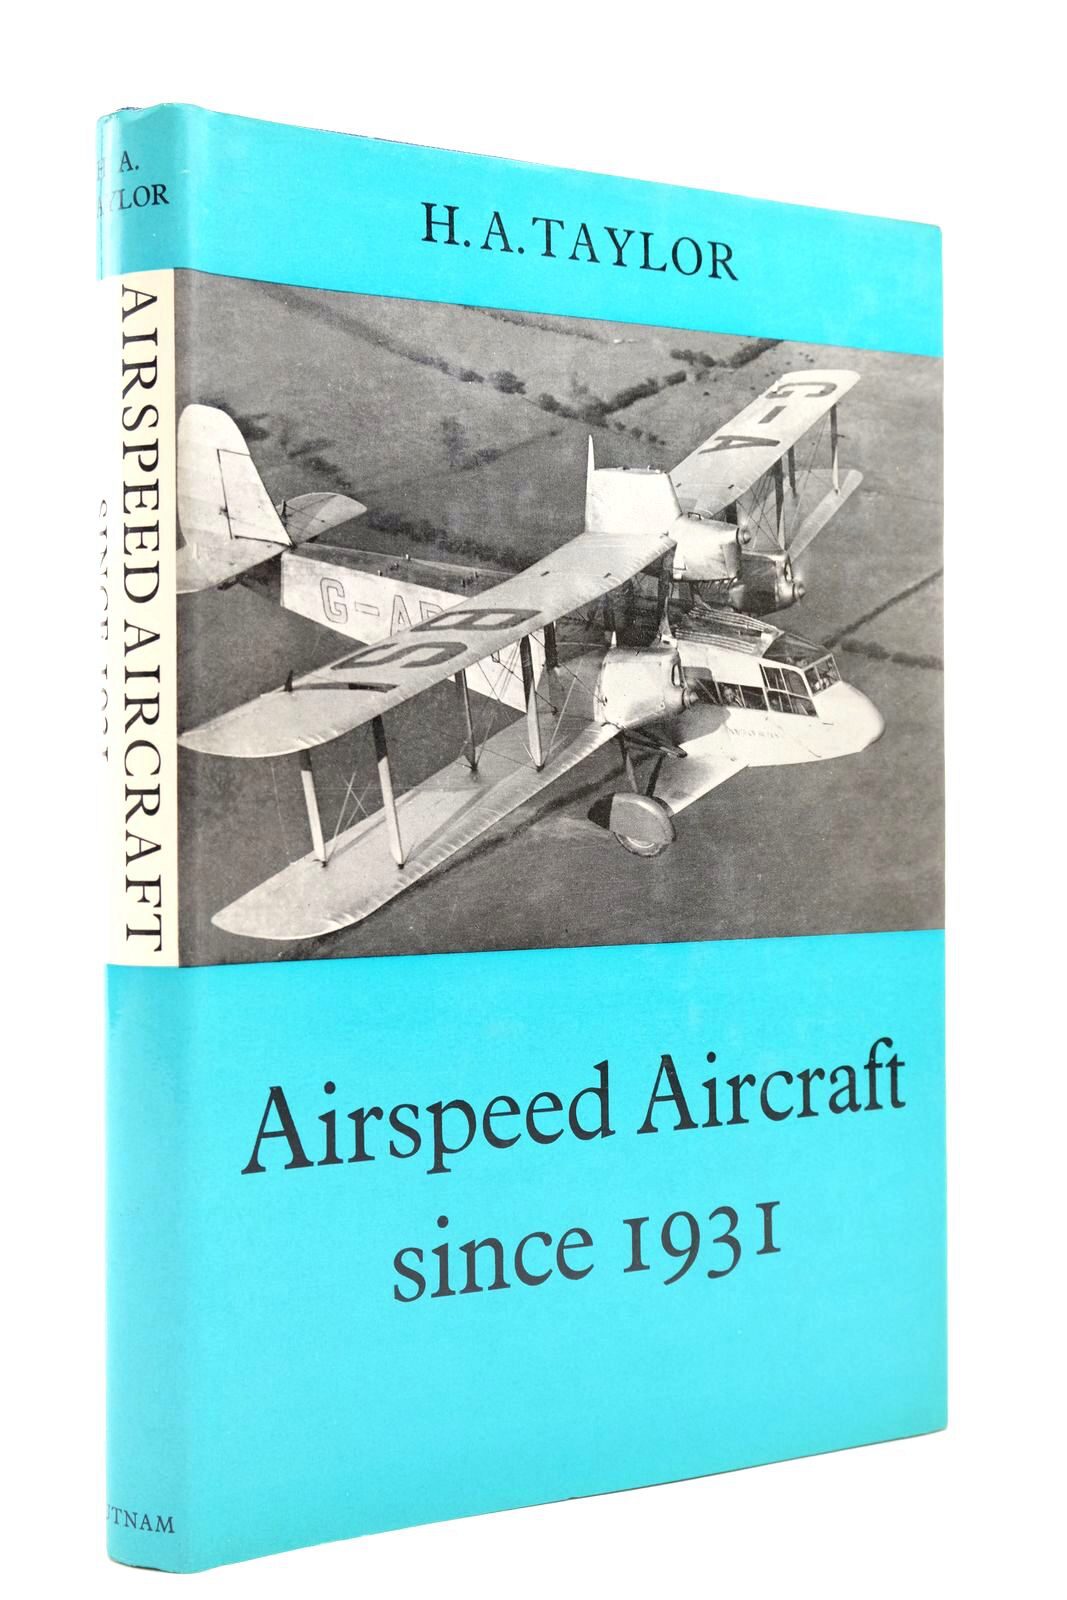 Buch B-533 *Airspeed Aircraft since 1931